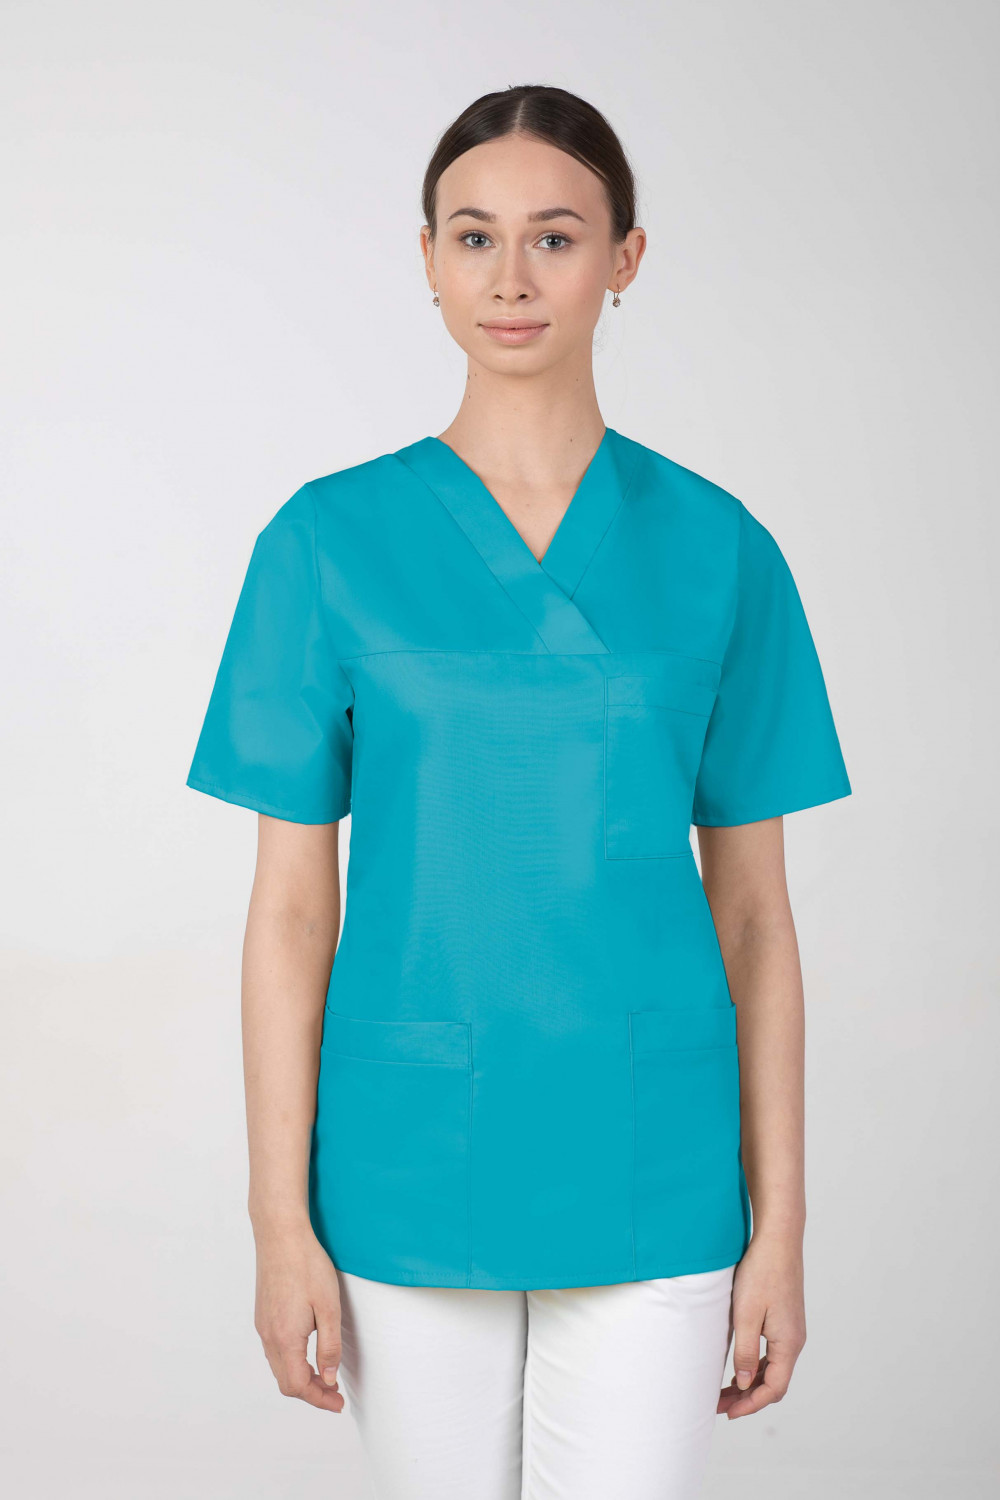 M-074 Bluza damska medyczna fartuch lekarski kolor turkus